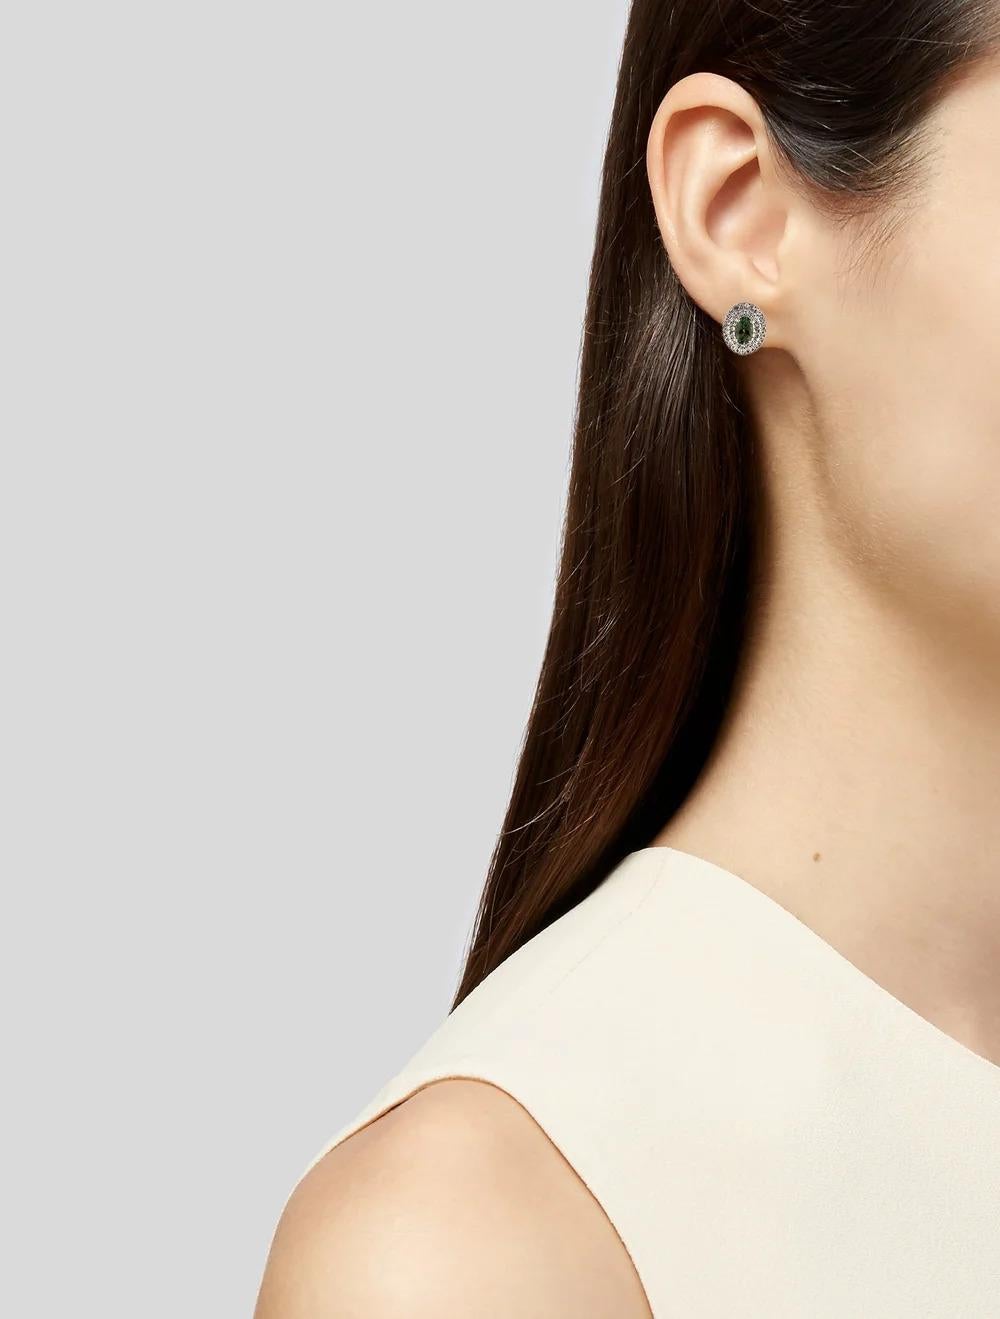 Oval Cut 14K Tourmaline & Diamond Stud Earrings - Elegant Statement Jewelry Piece For Sale